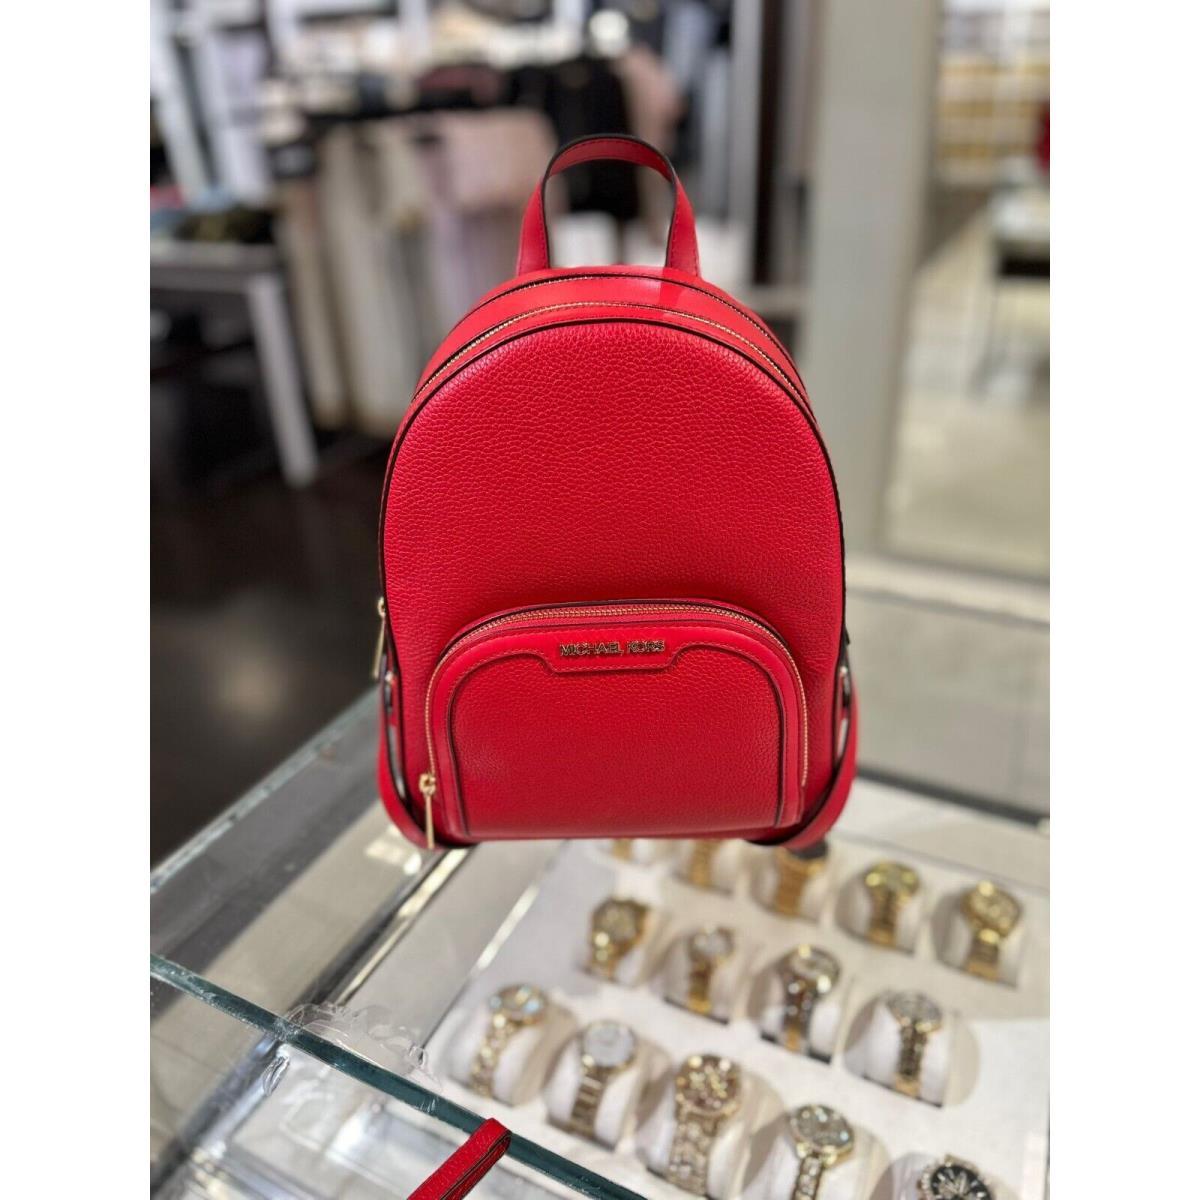 Michael Kors Women Girls Medium School Travel Shoulder Backpack Bag Satchel -var BRIGHT RED